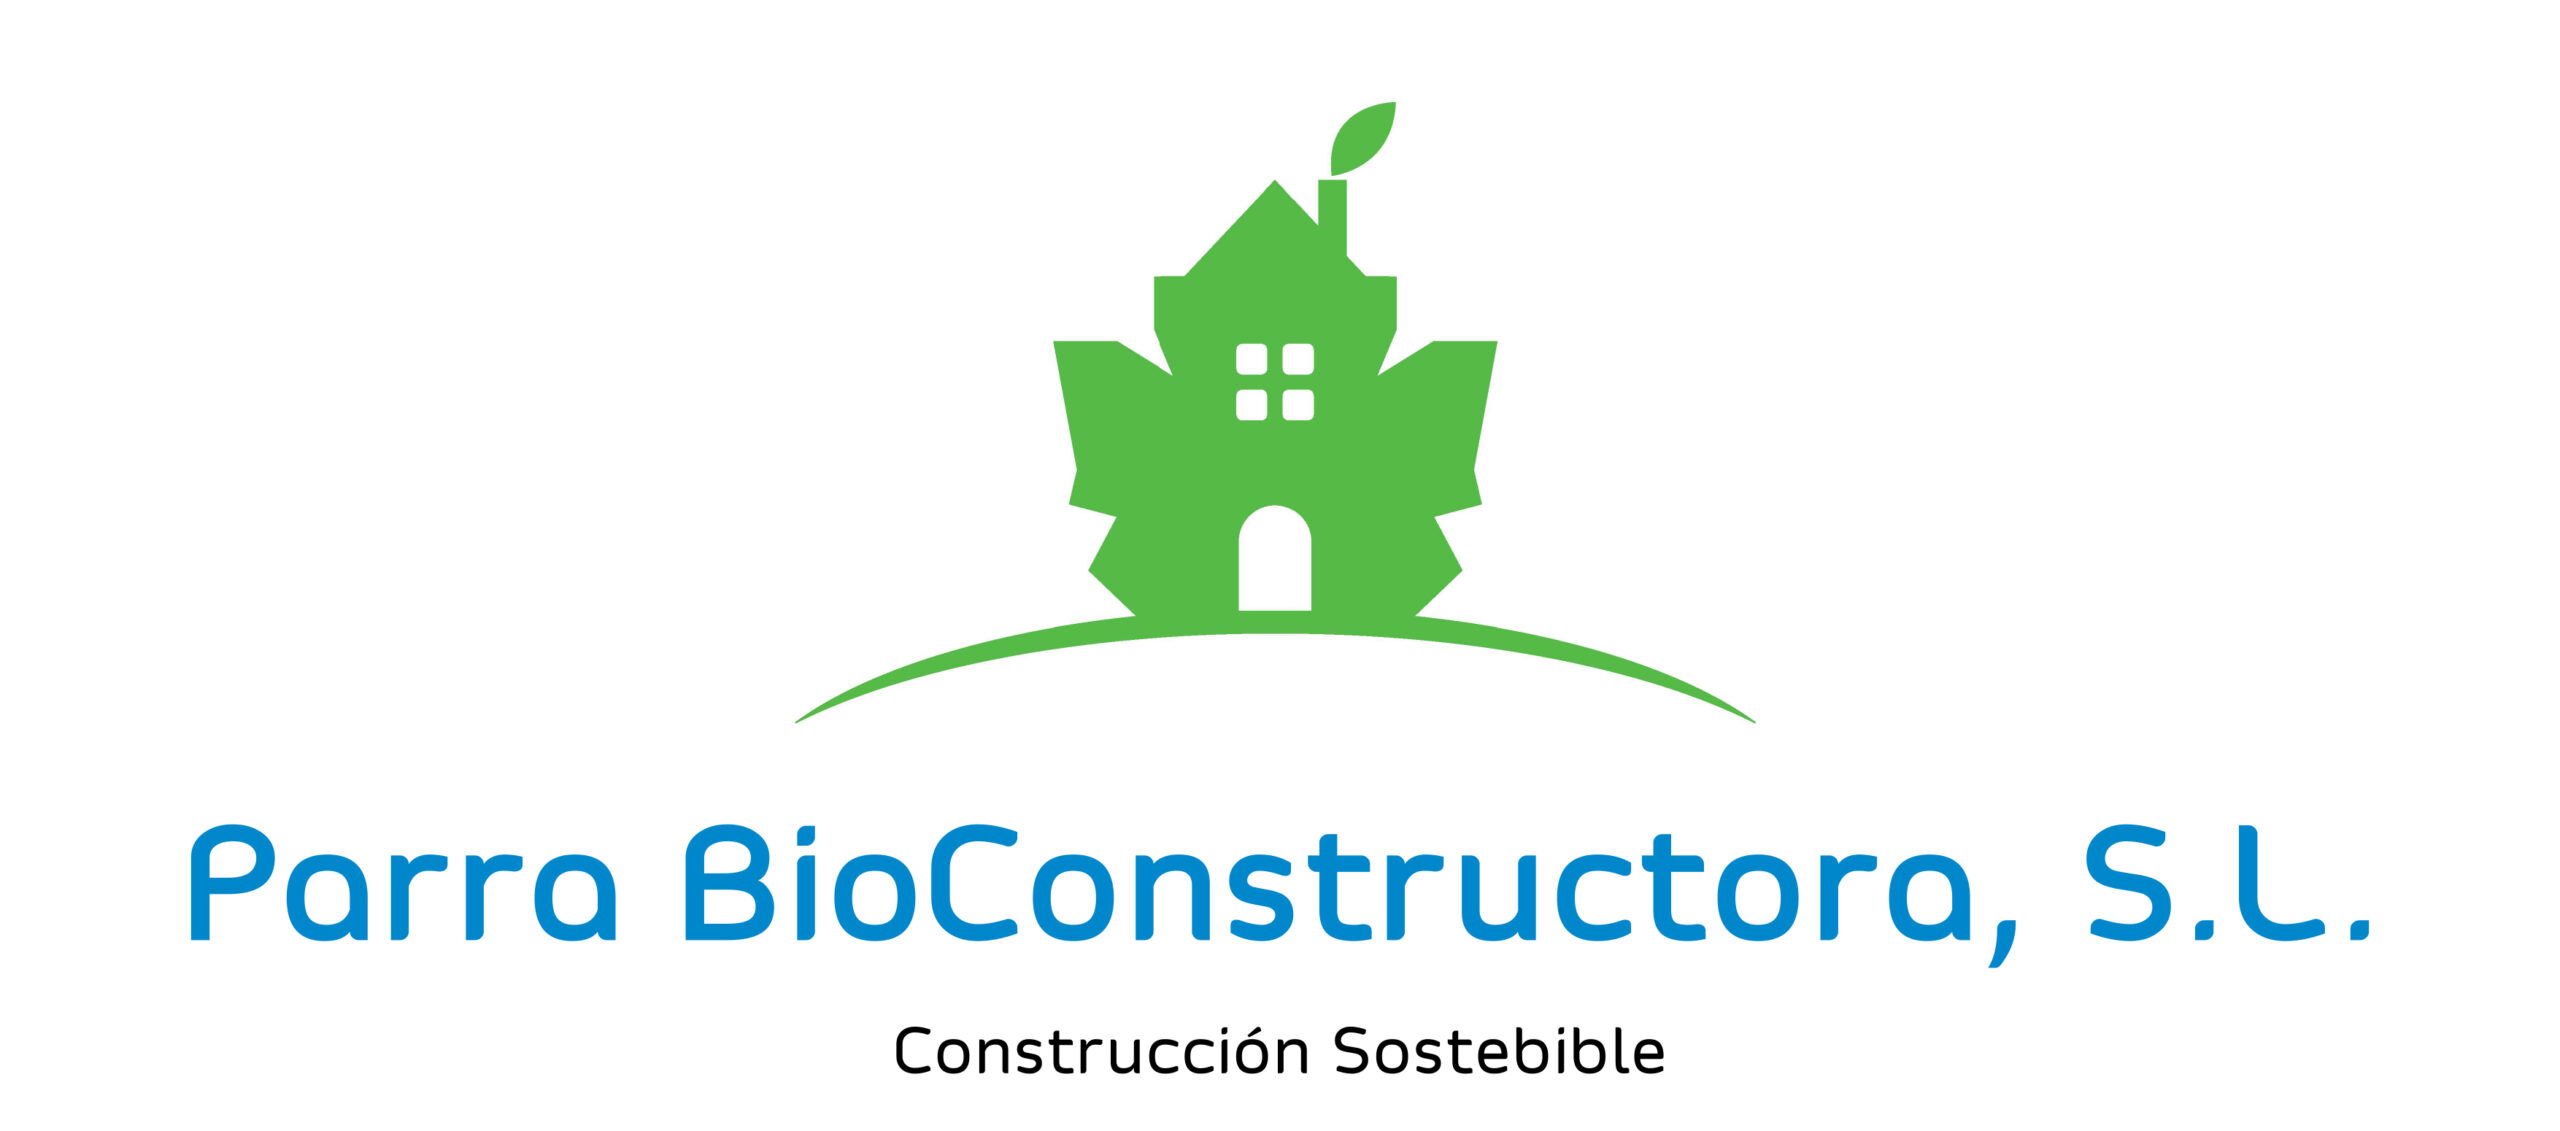 Bioconstructora